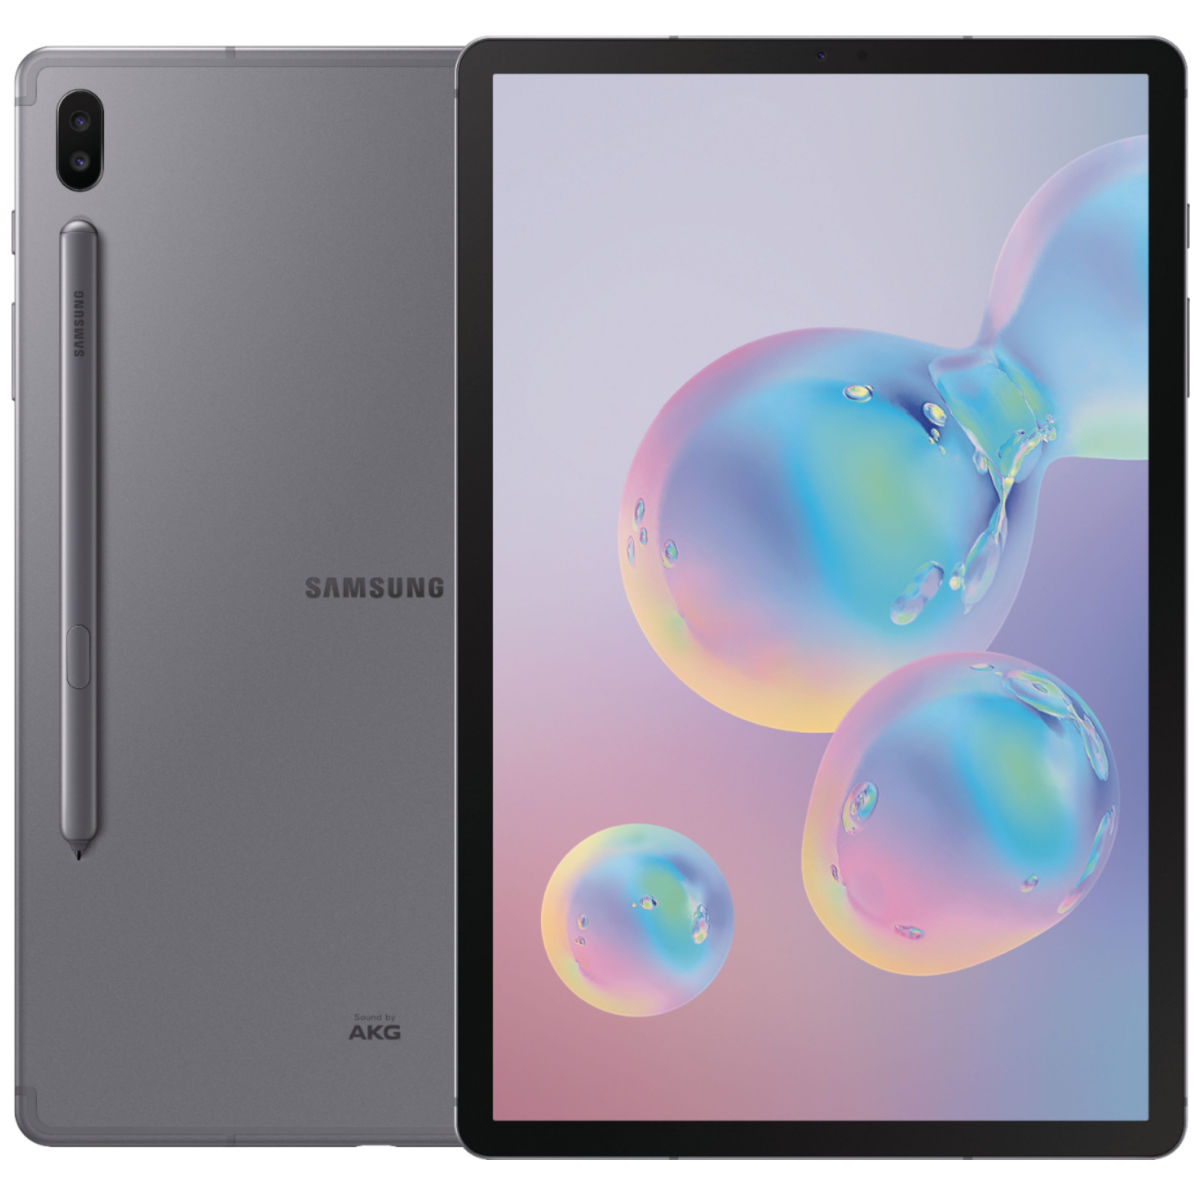 Samsung Galaxy Tab S6 Tablet Mountain Gray